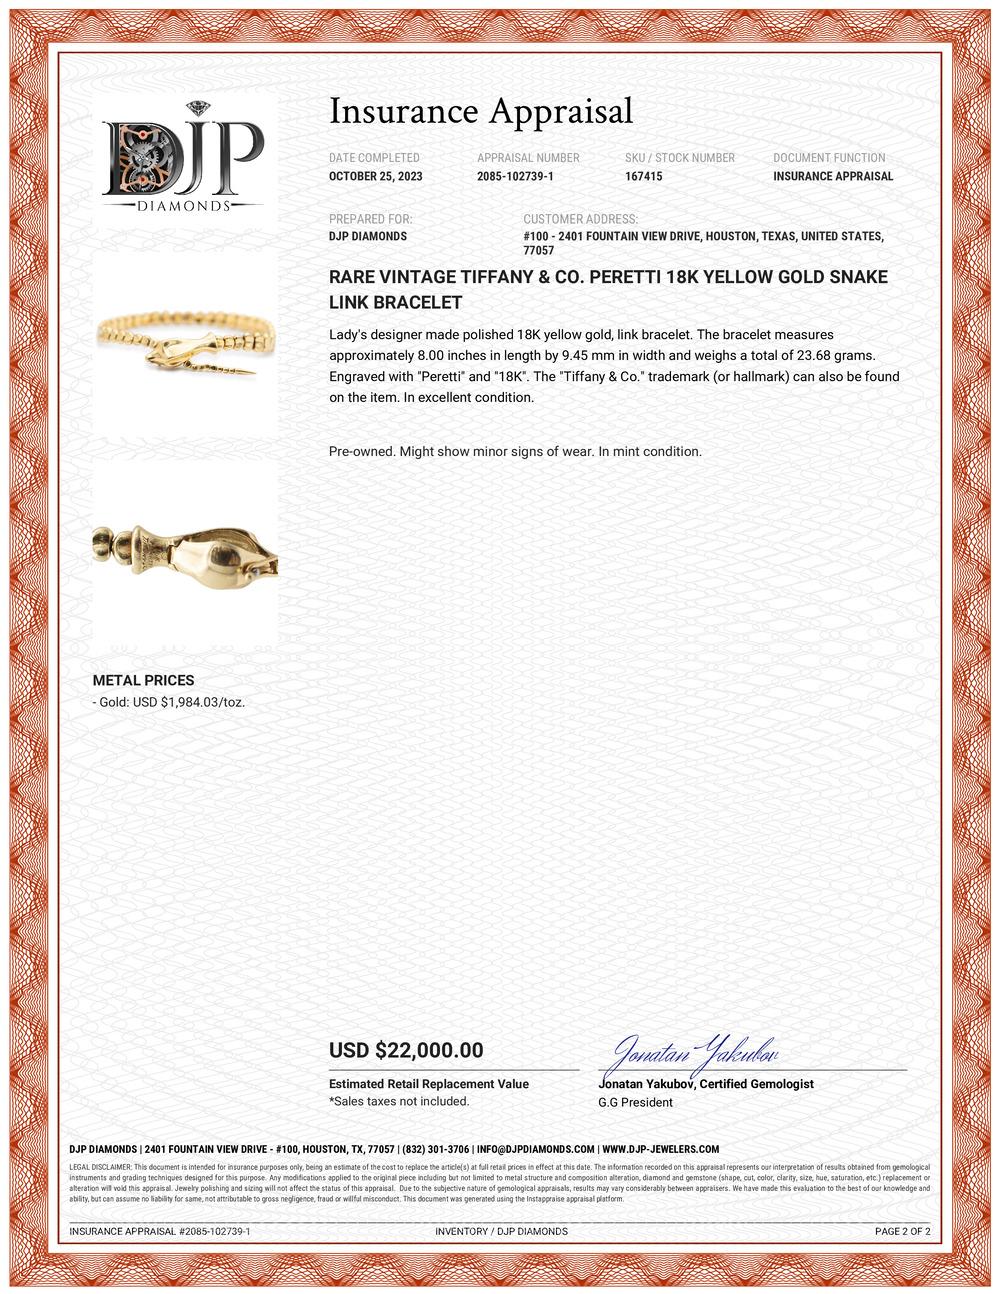 Rare Vintage Tiffany & Co. Peretti 18K Yellow Gold Snake Link Bracelet 4